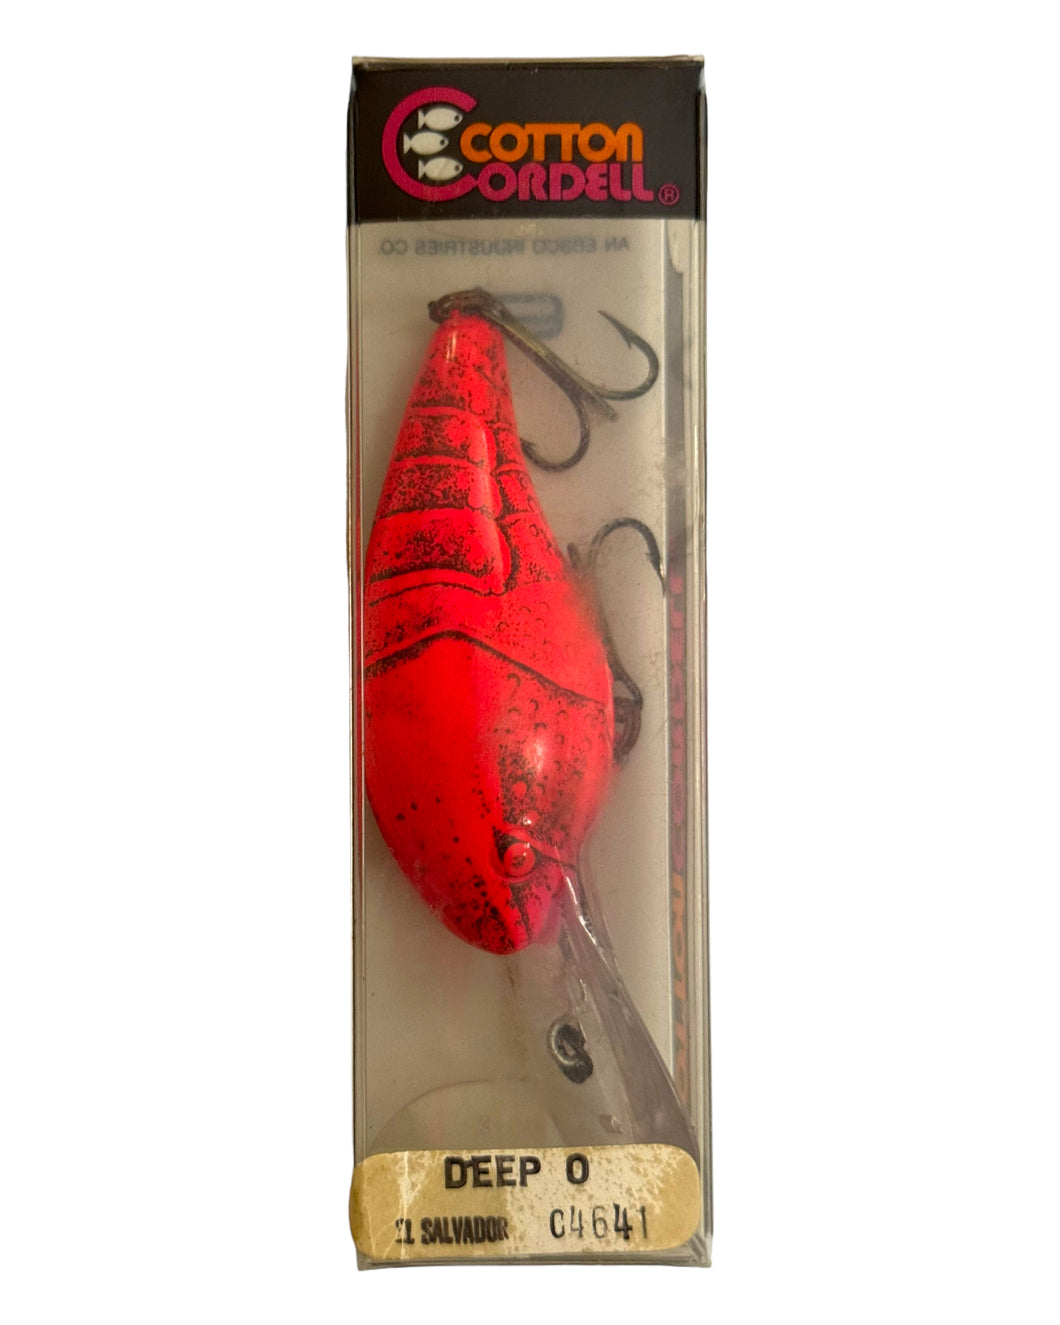 COTTON CORDELL DEEP BIG O Fishing Lure w/Original Box in Crawfish